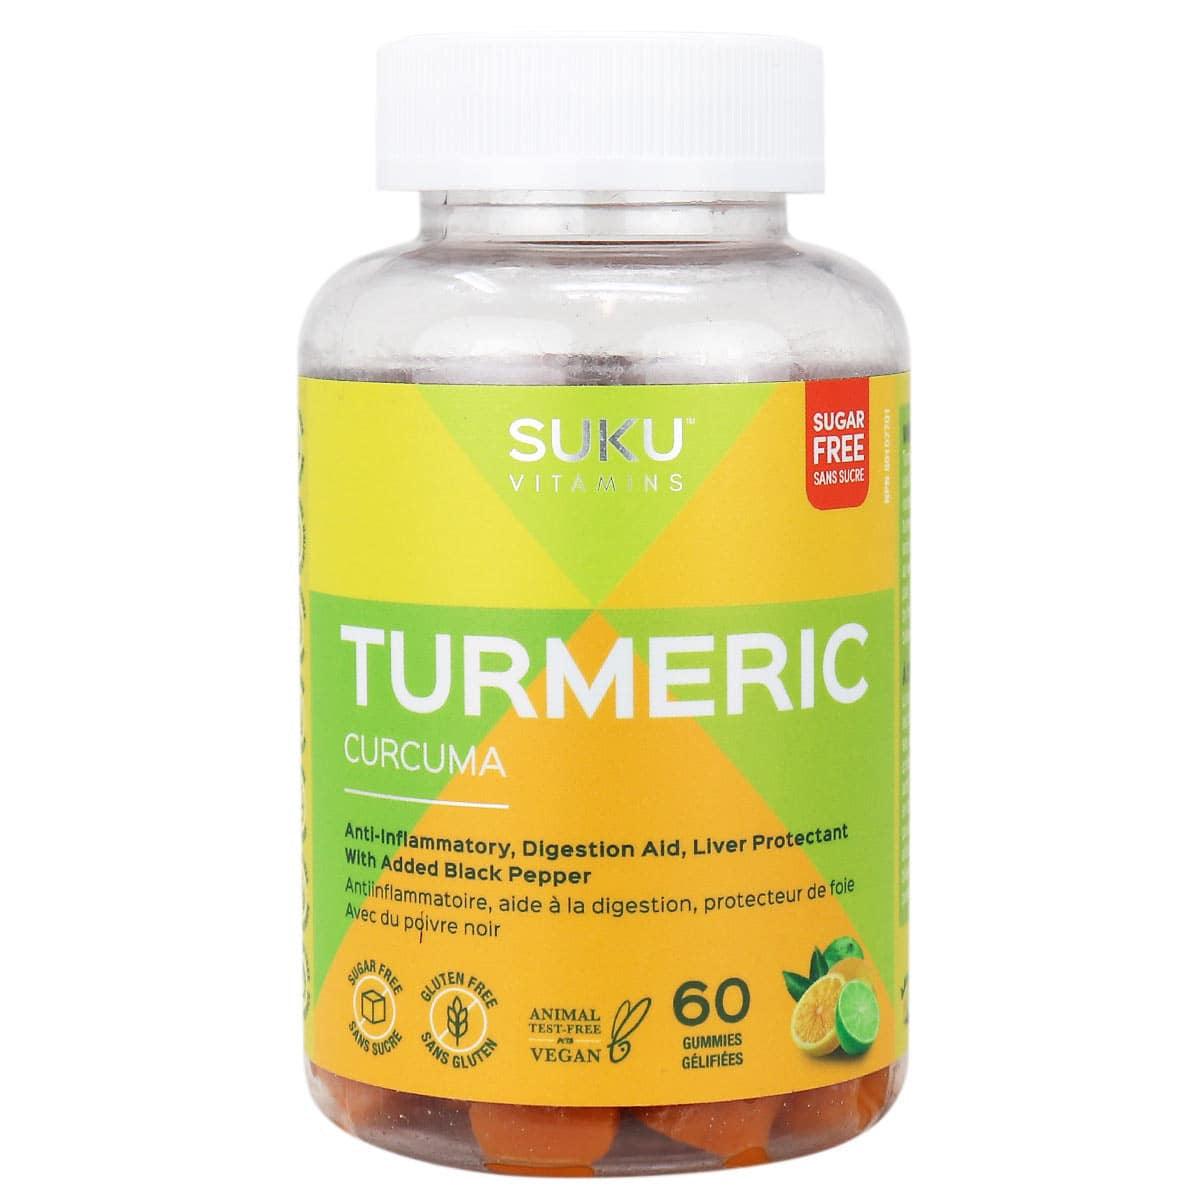 Suku Vitamins Turmeric Curcuma- 60 Gummies Supplements - Turmeric at Village Vitamin Store